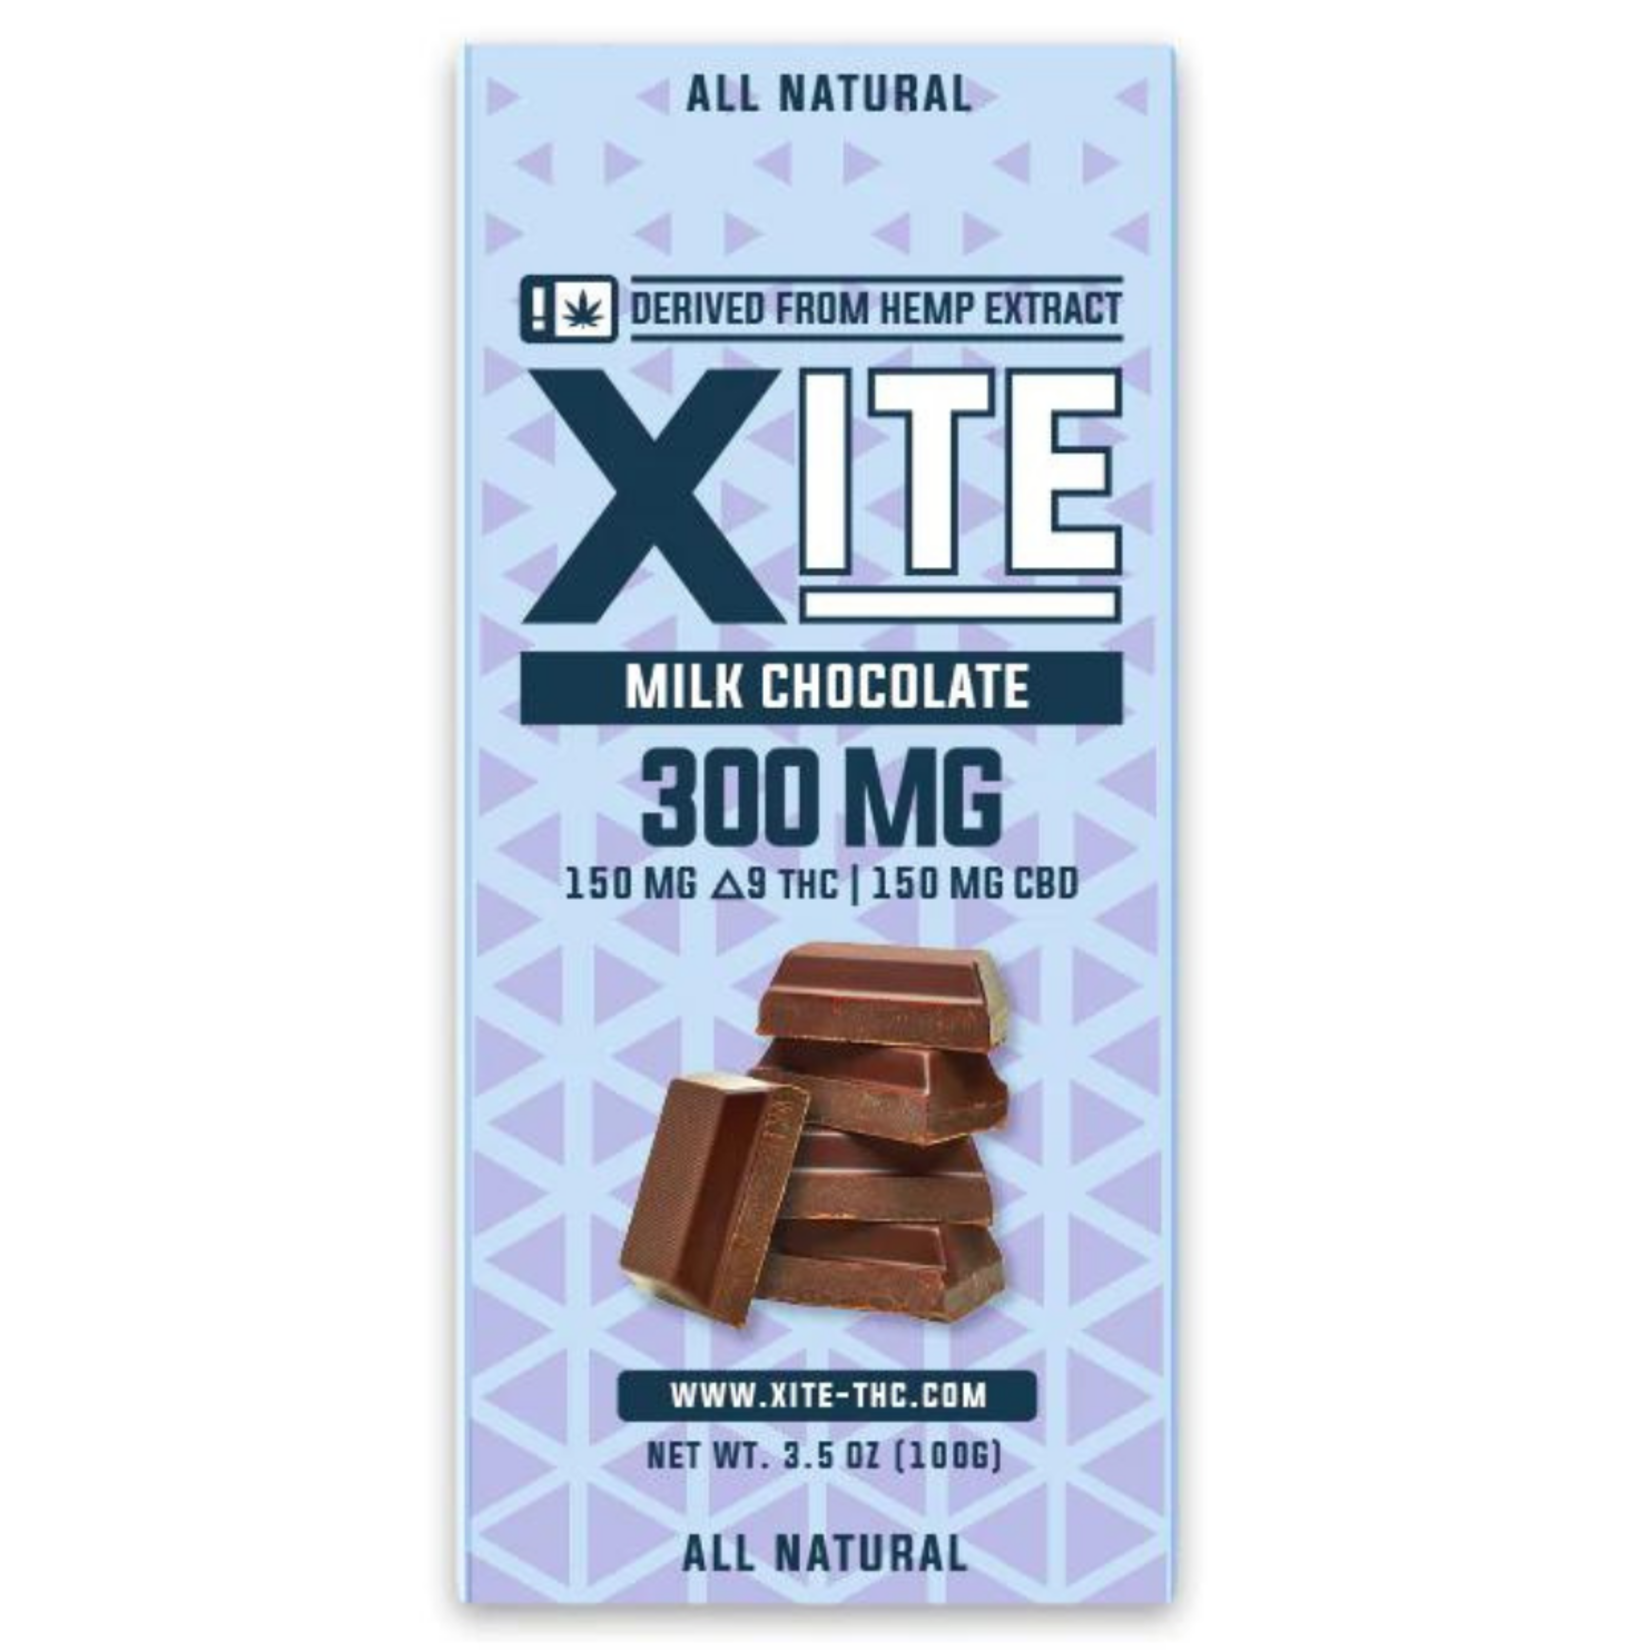 Xite Xite Delta 9 Chocolate Bar 300mg - Milk Chocolate